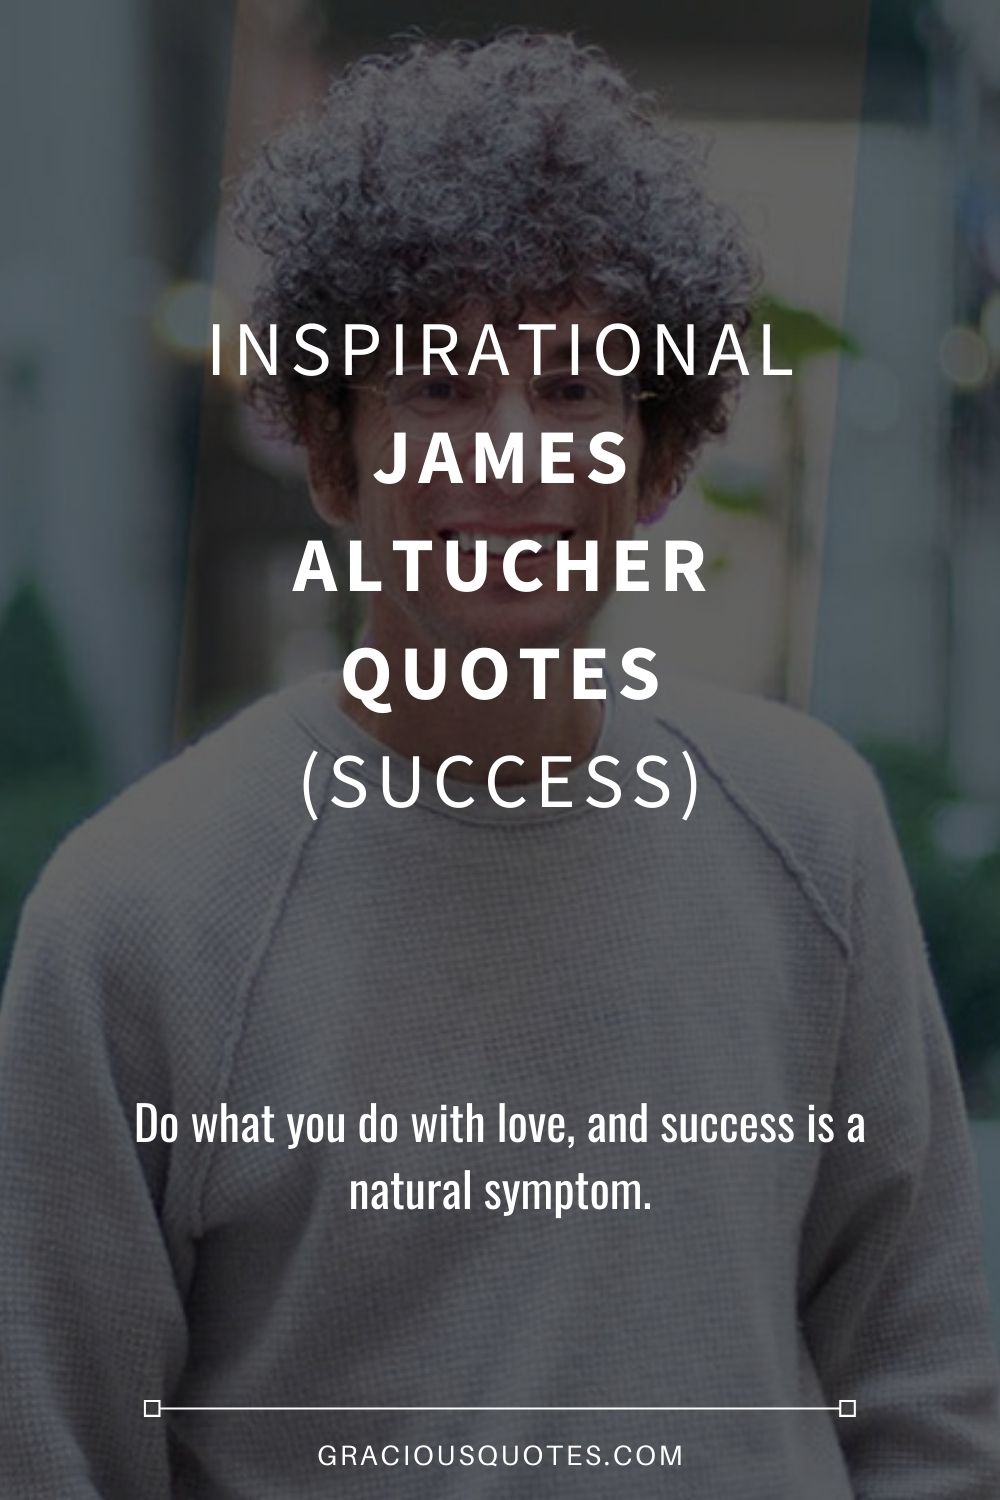 Inspirational James Altucher Quotes (SUCCESS) - Gracious Quotes